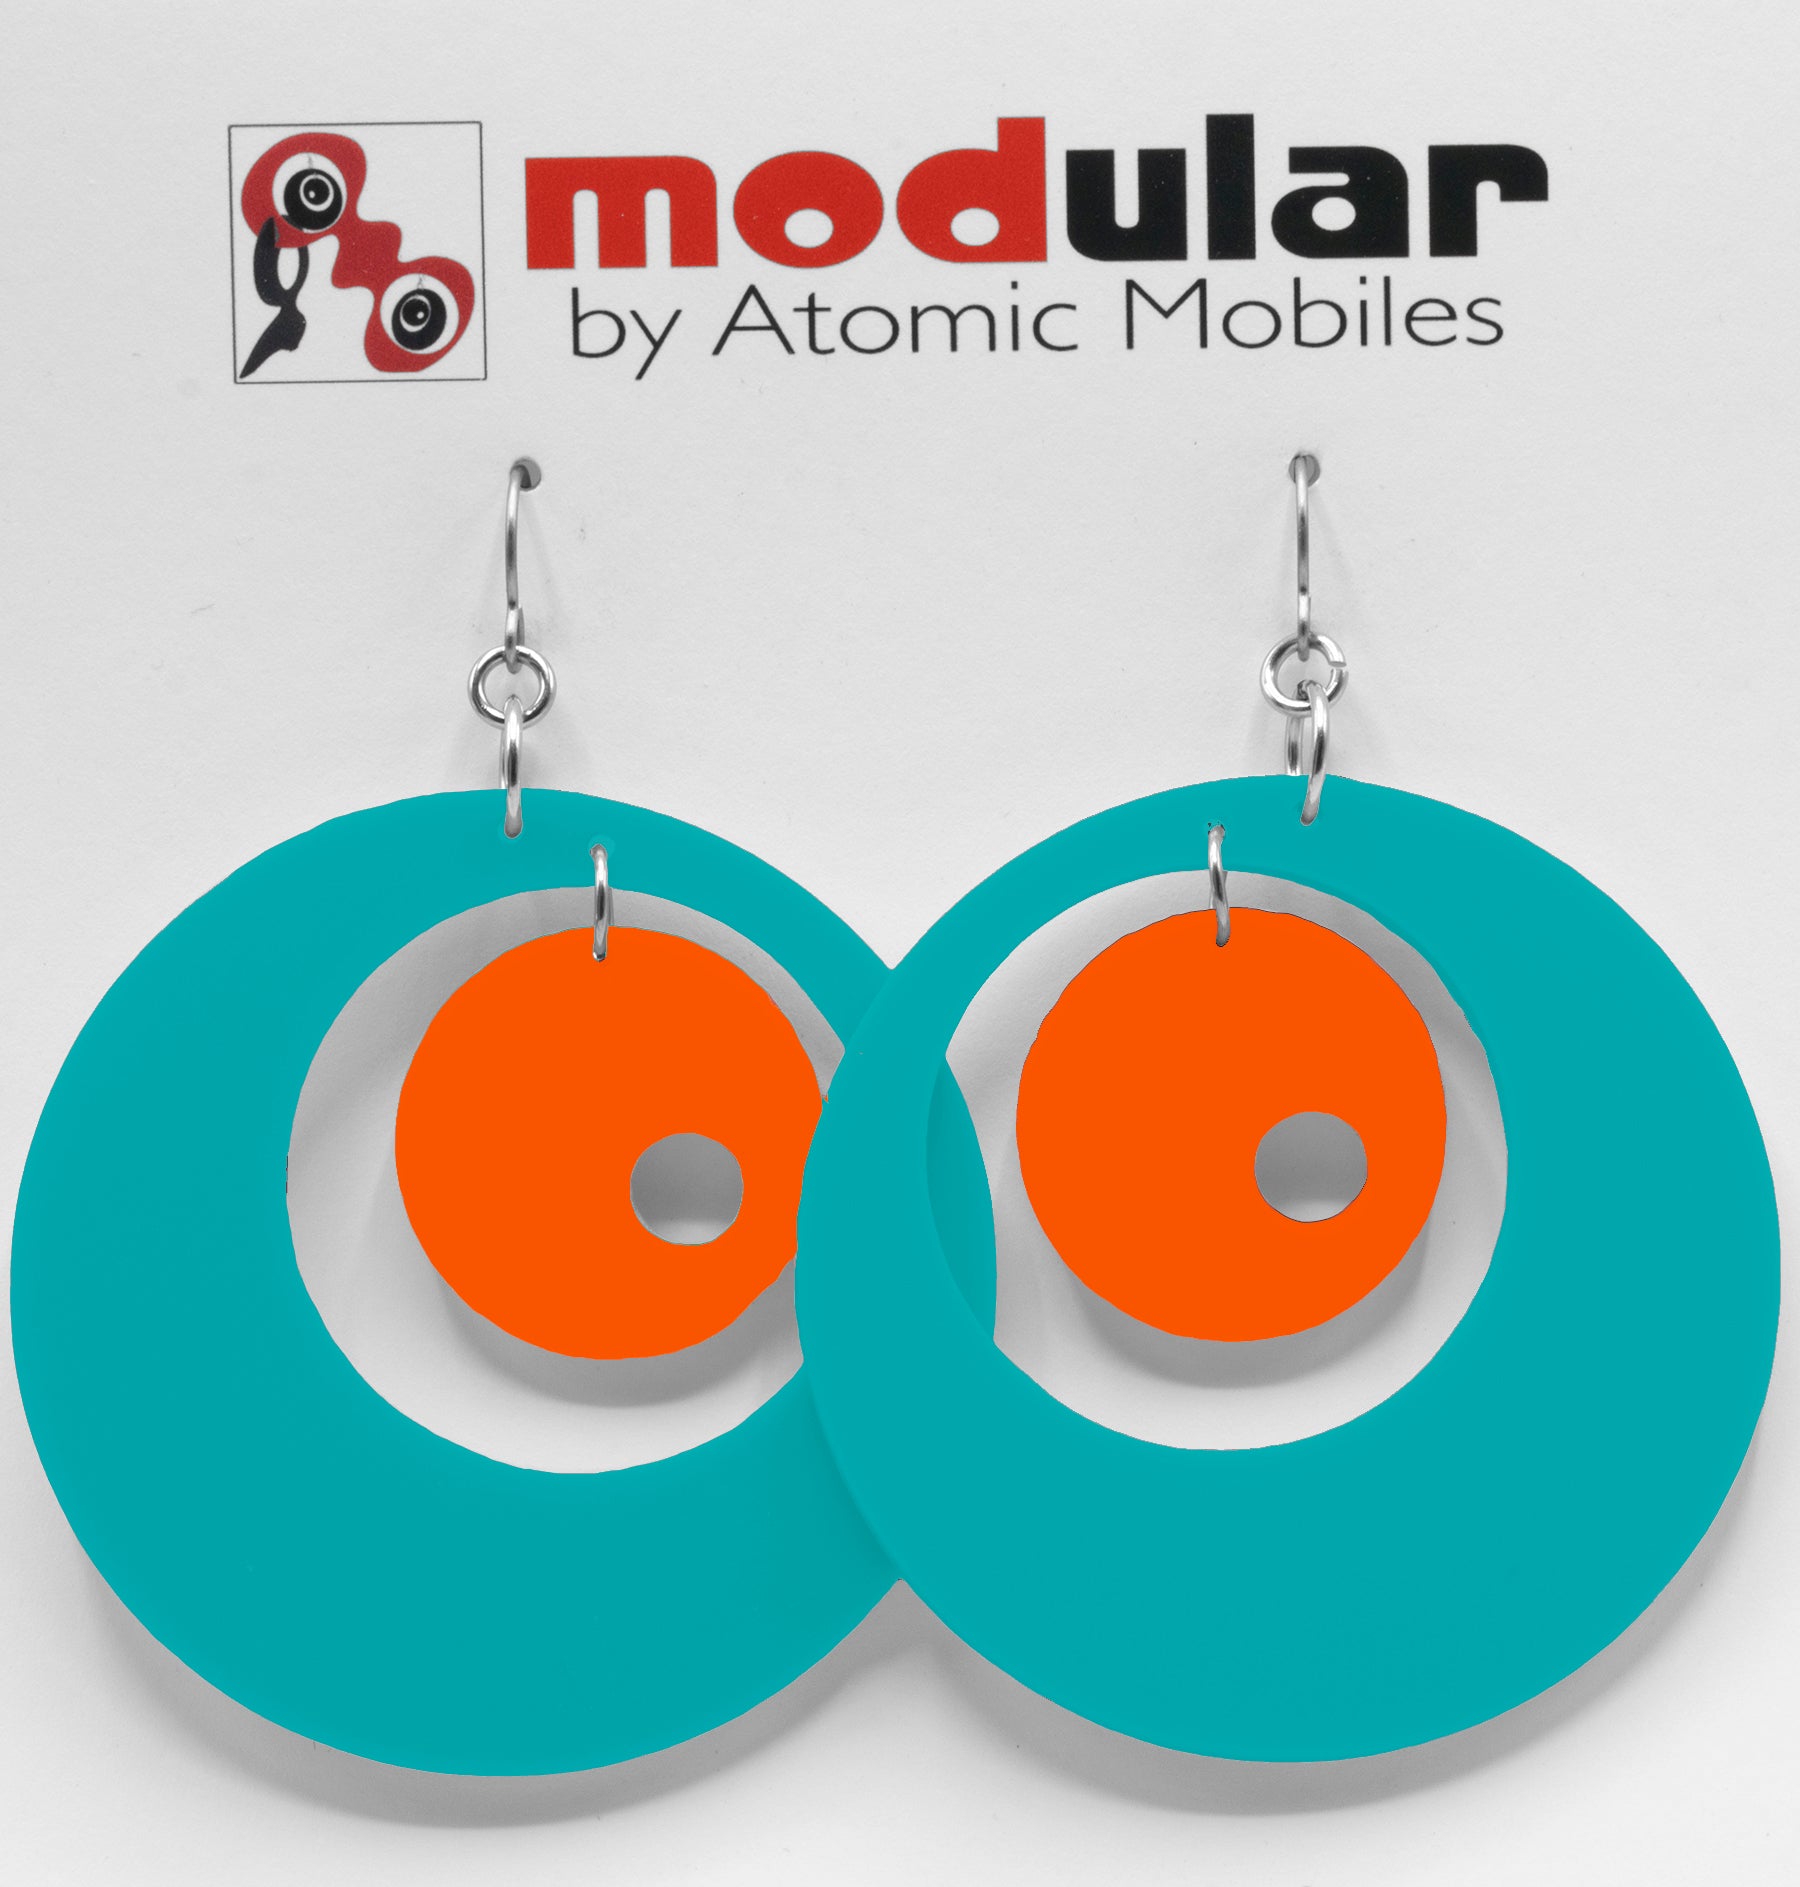 MODular Earrings - Groovy Statement Earrings in Aqua and Orange by AtomicMobiles.com - retro era inspired mod handmade jewelry